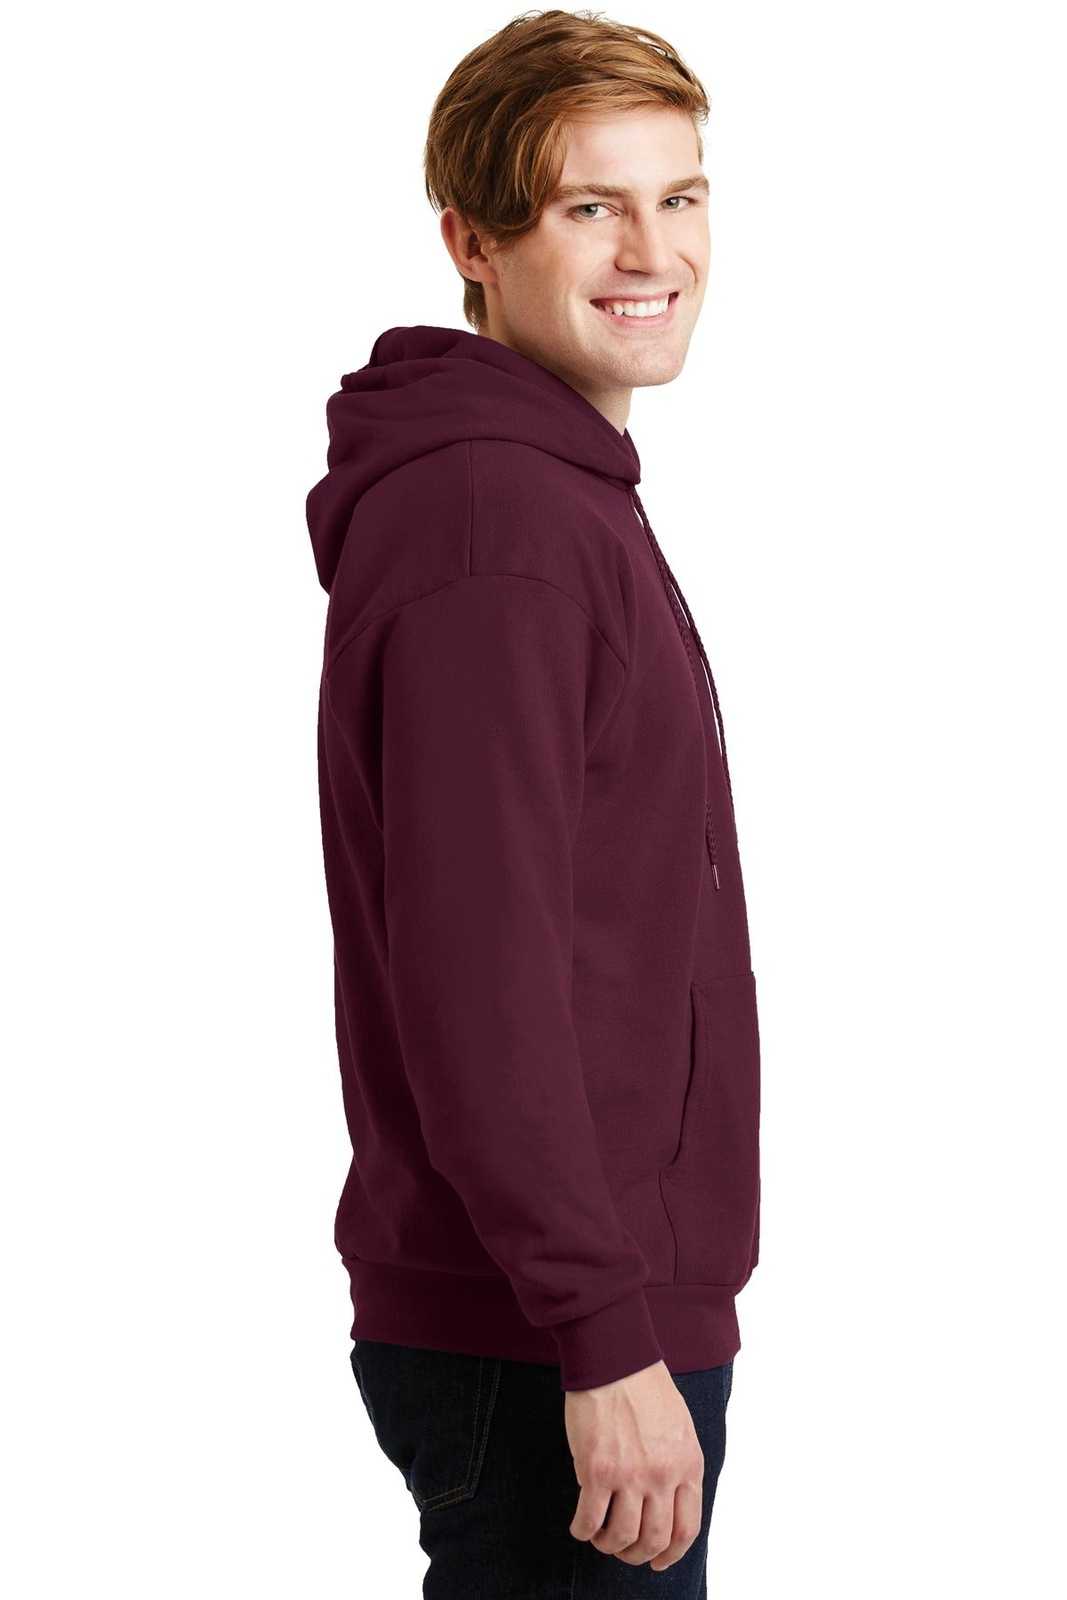 Hanes P170 Ecosmart Pullover Hooded Sweatshirt - Maroon - HIT a Double